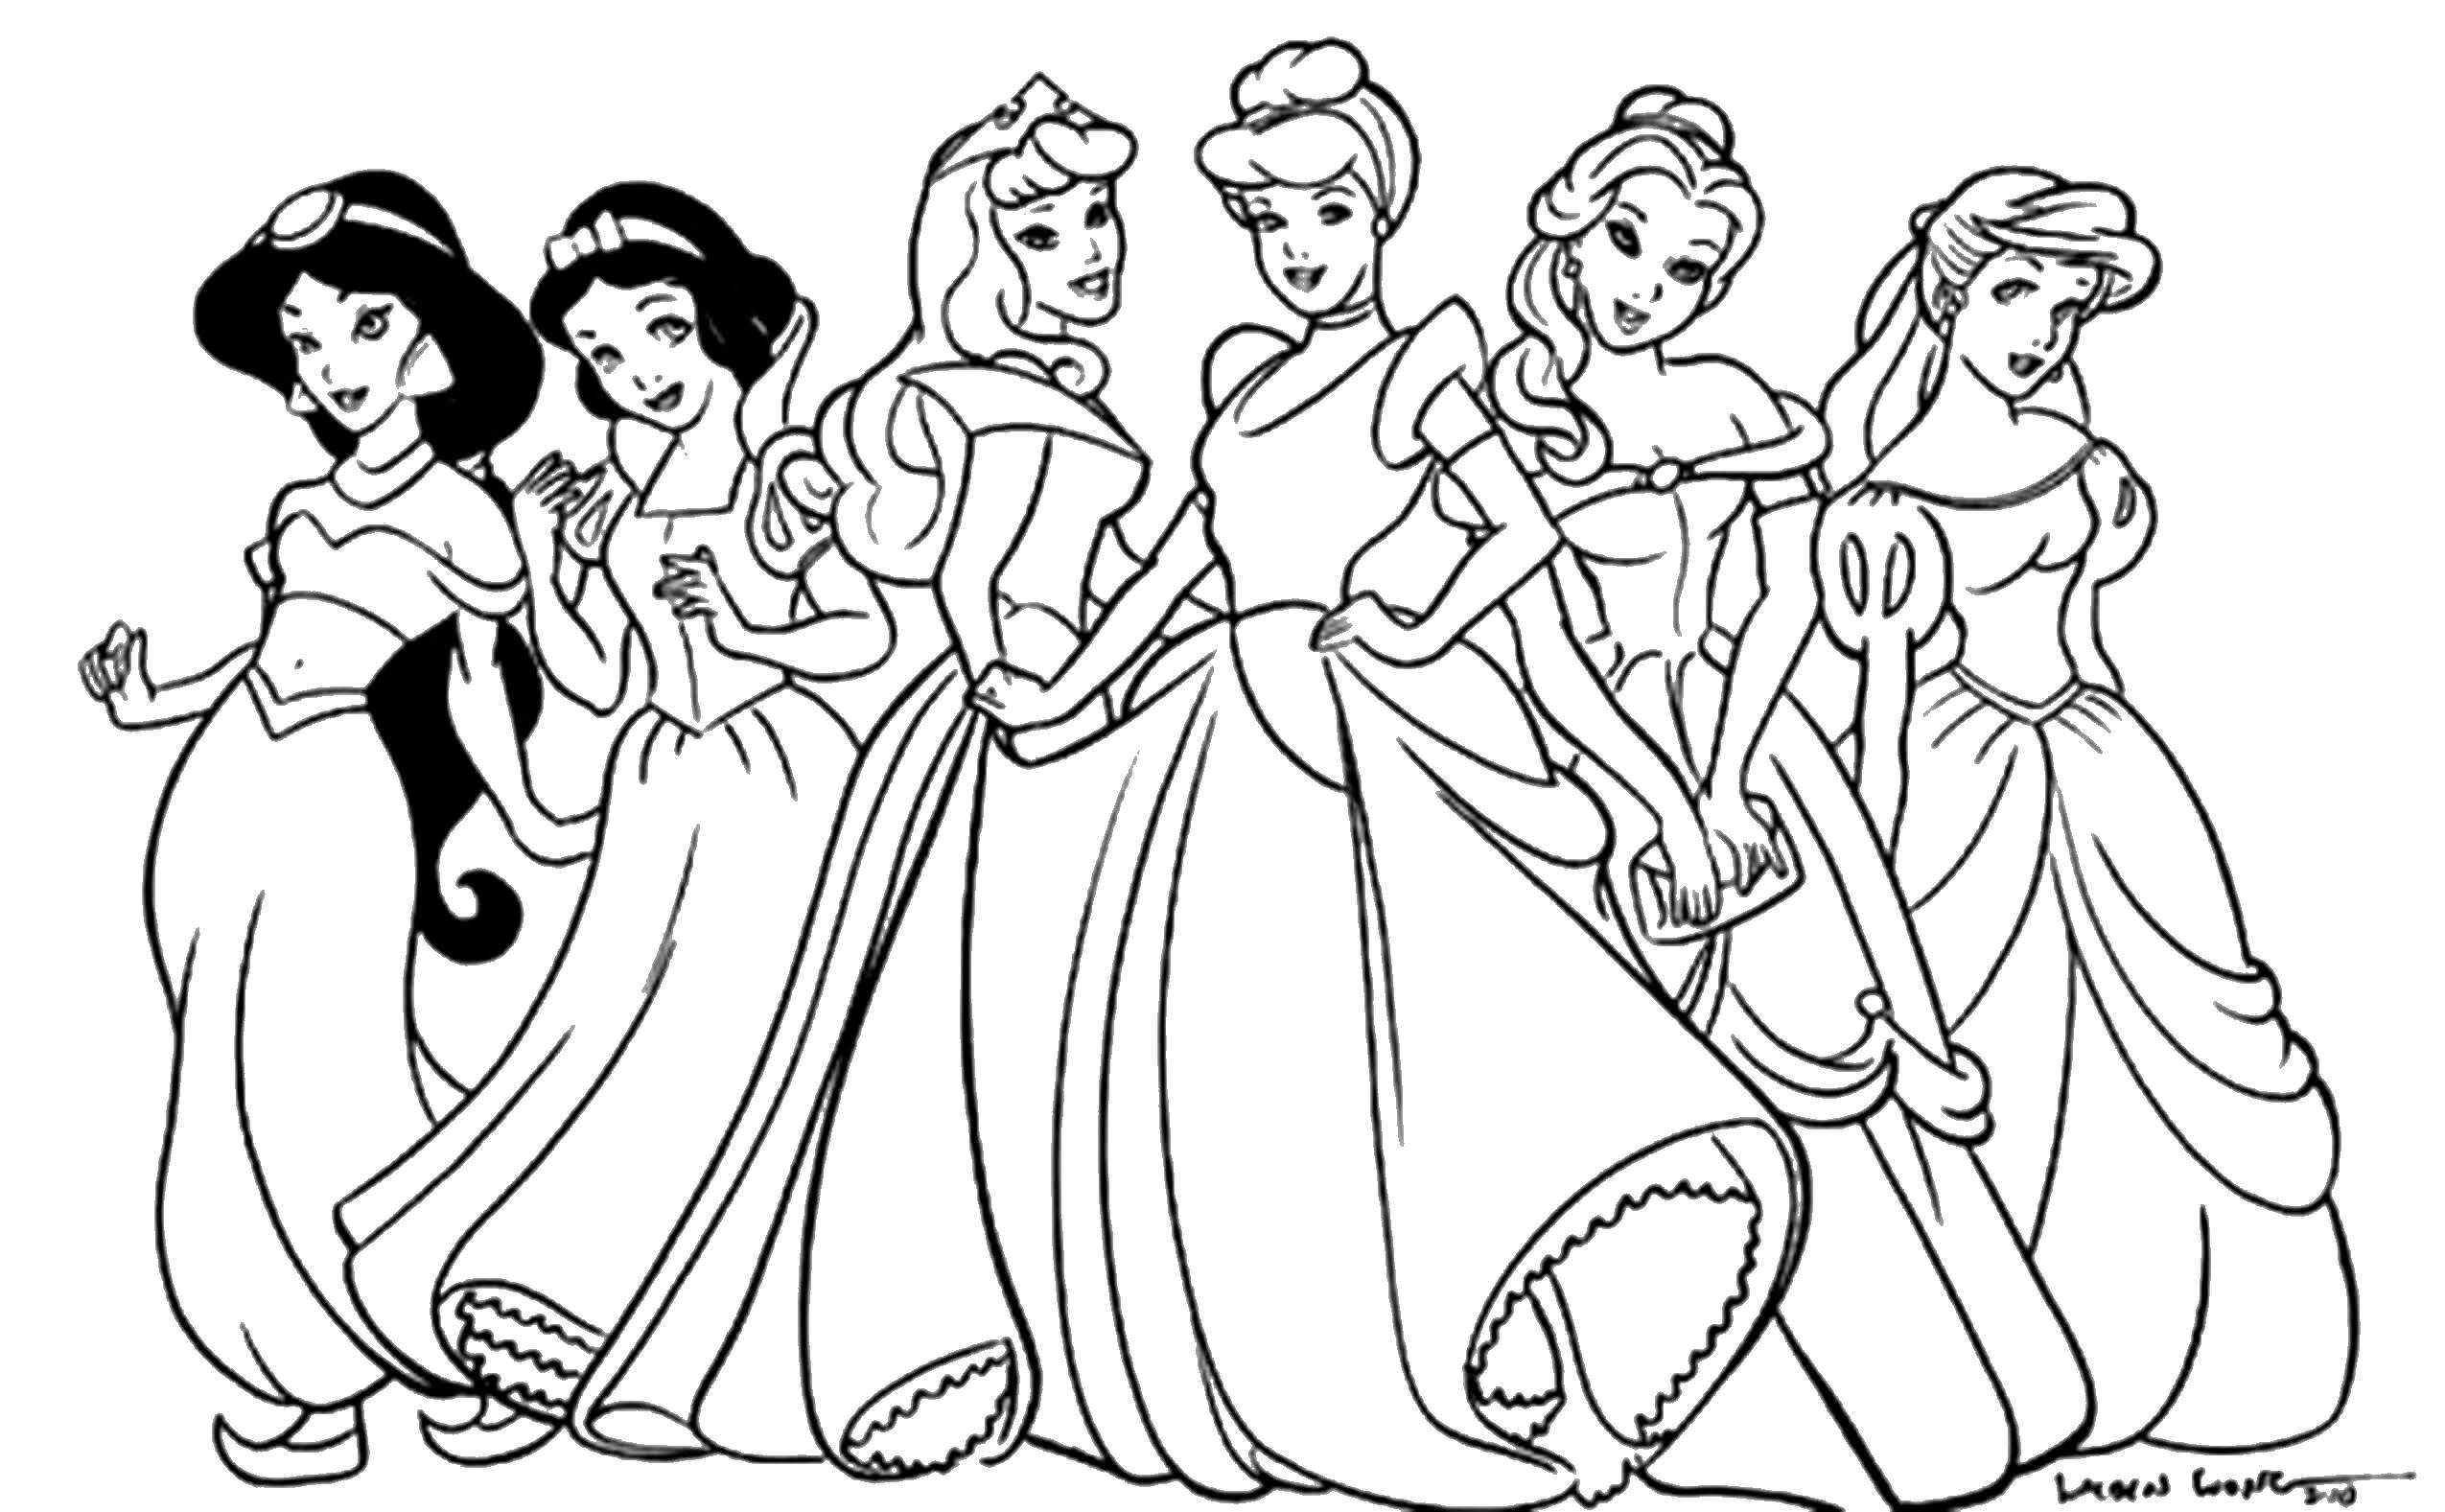 Coloring Disney Princess. Category Disney coloring pages. Tags:  Disney, Princess.